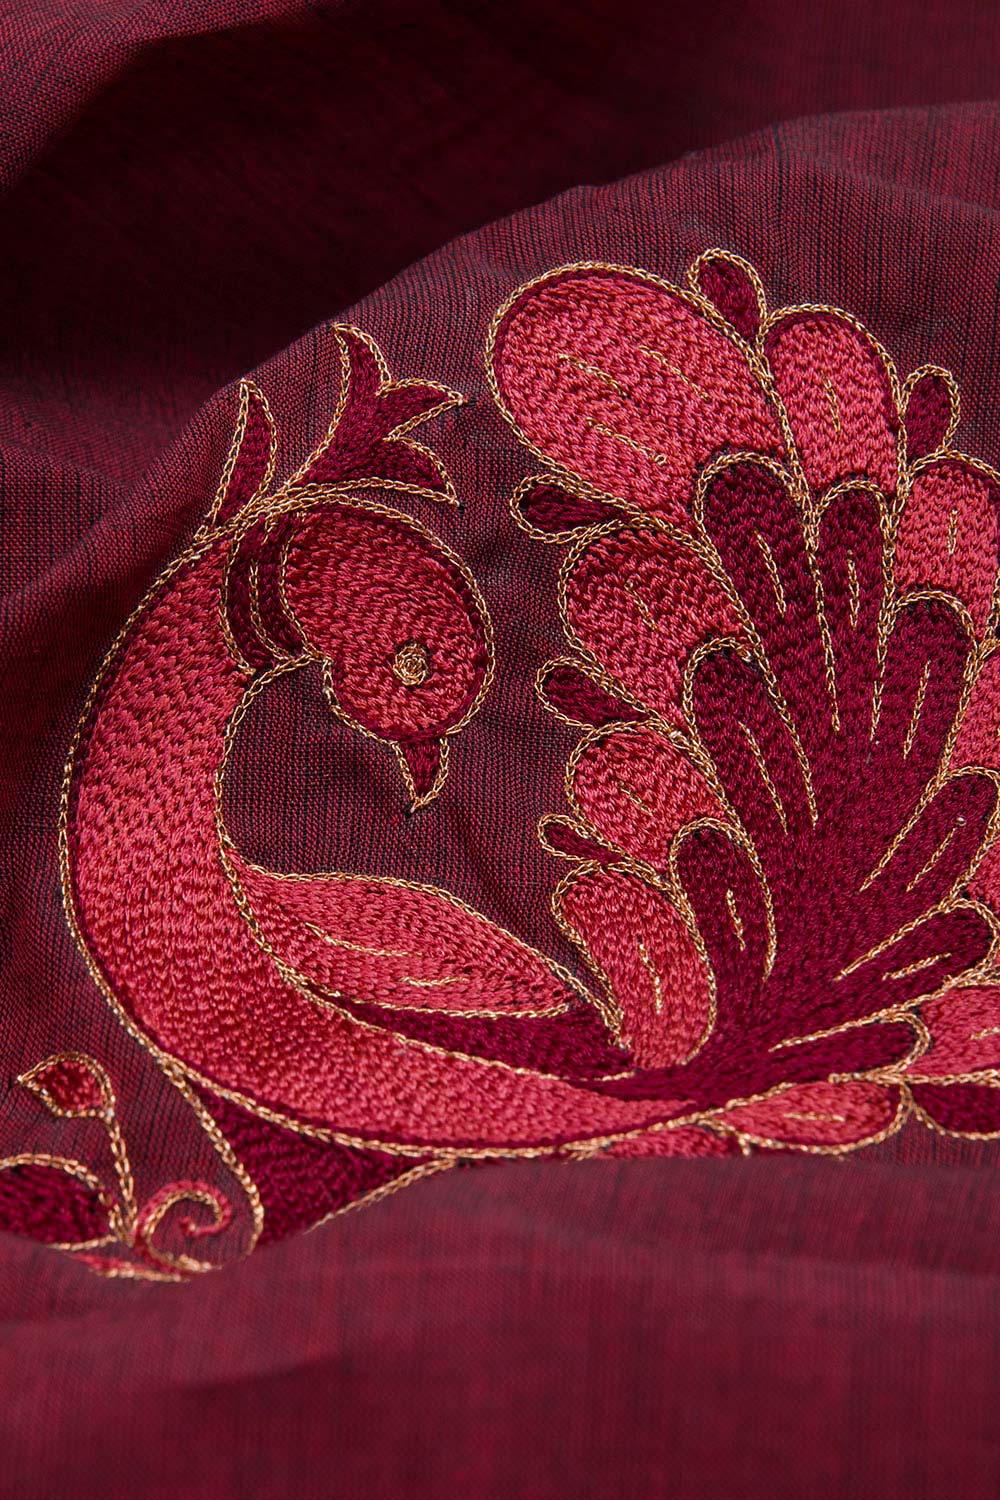 Velvet Maroon  Aari Embroidered Mangalgiri Cotton Blouse Material 10062433